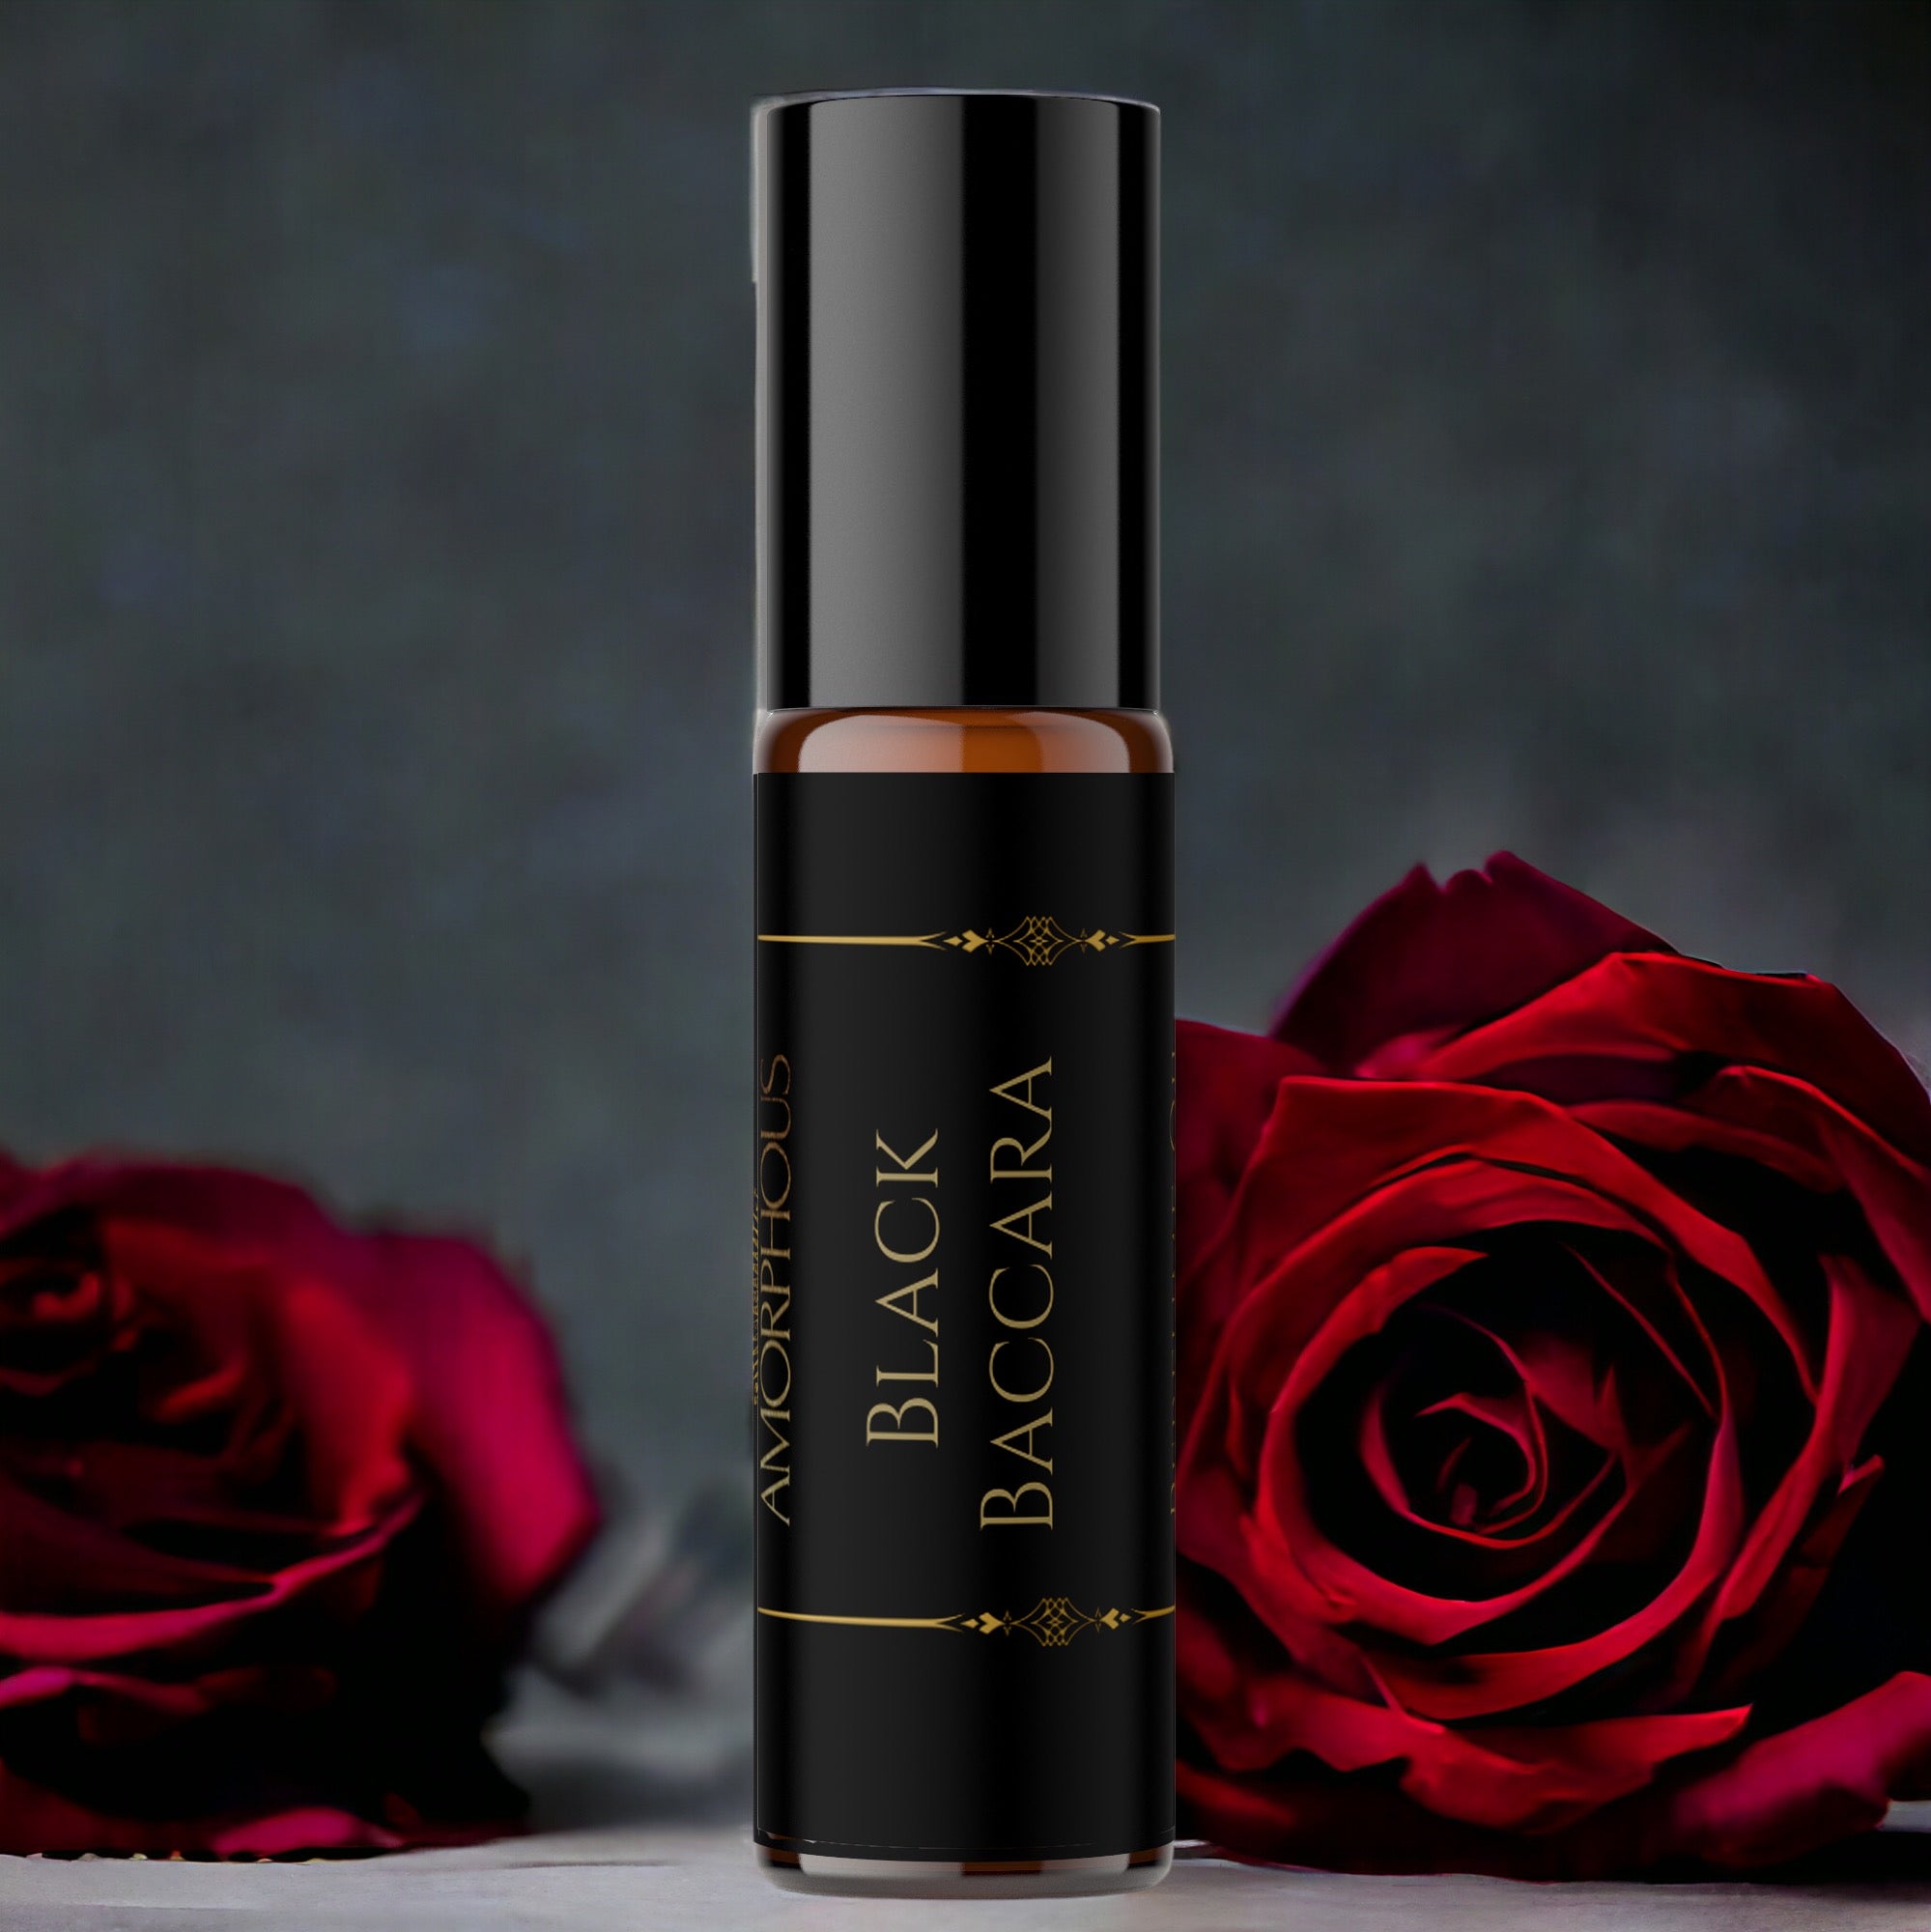 Black Baccara perfume oils